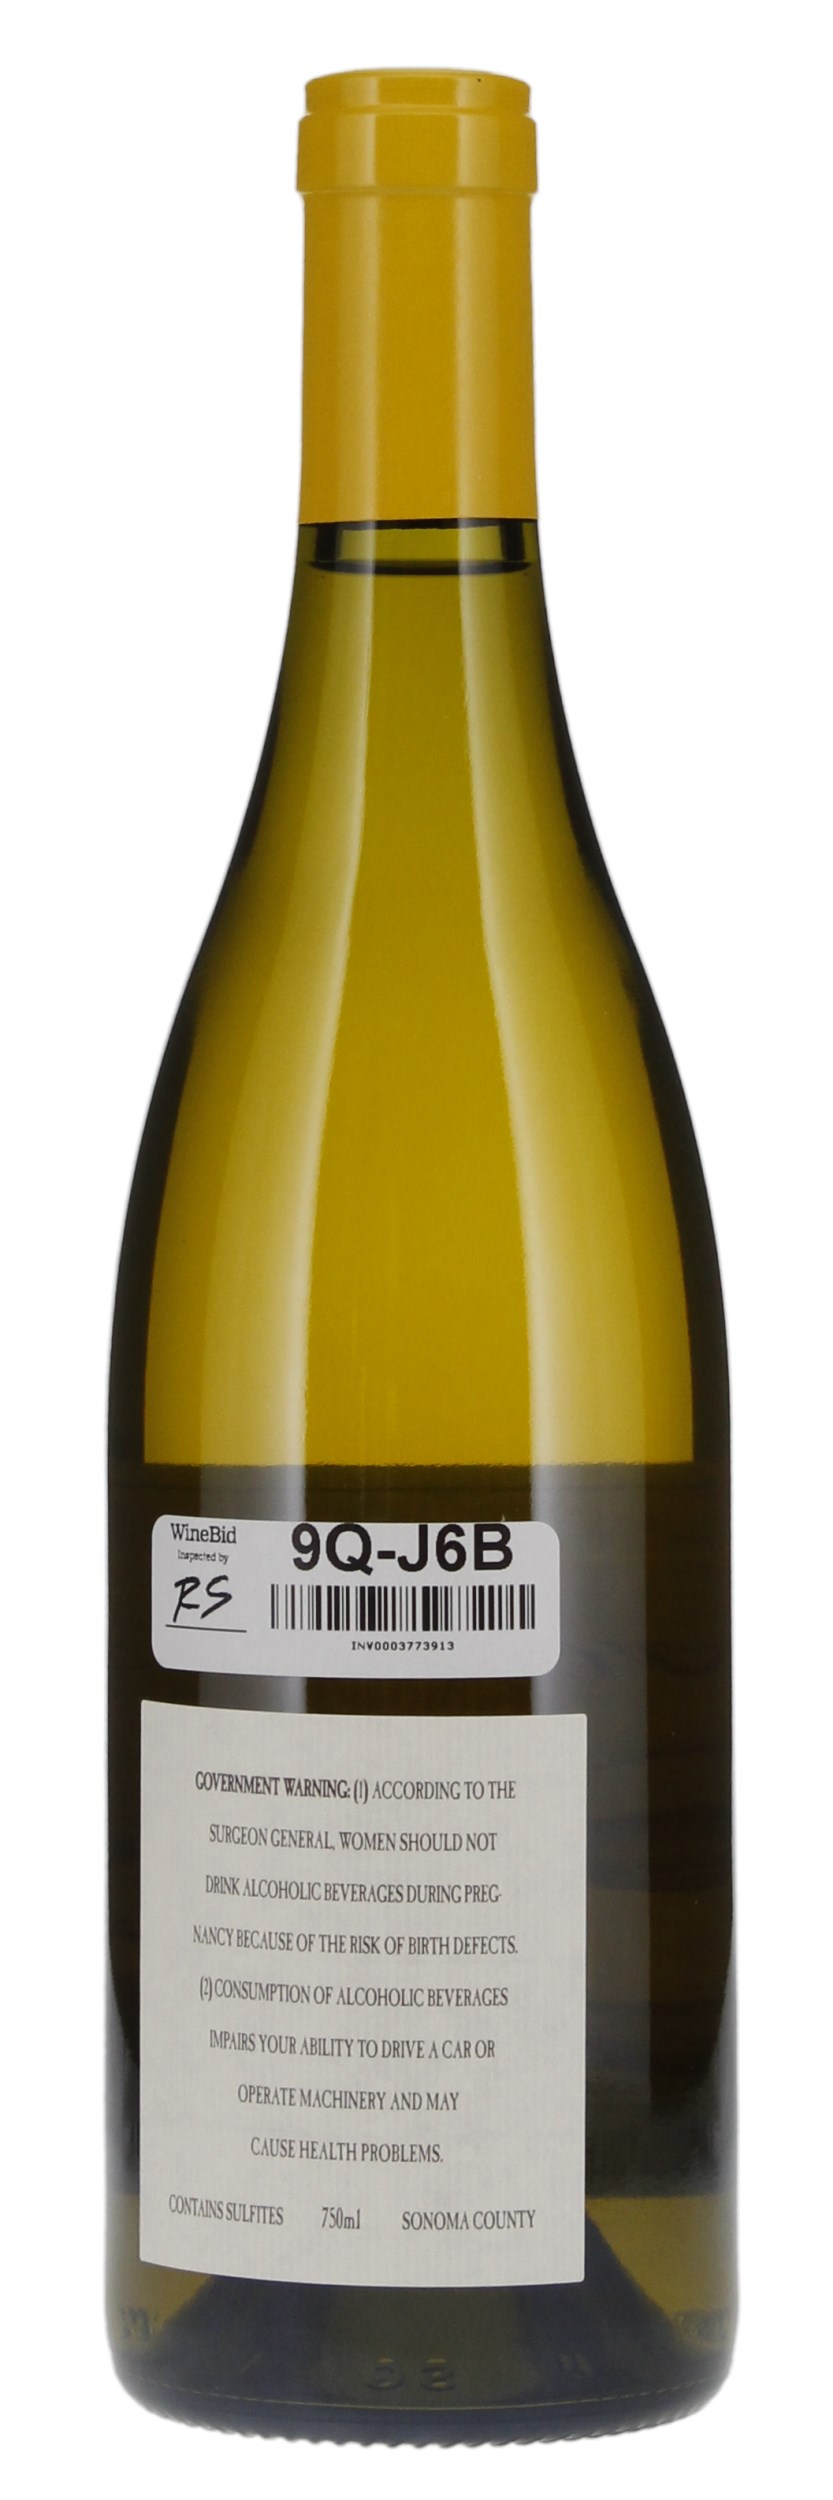 2013 Marcassin Vineyard Chardonnay, 750ml